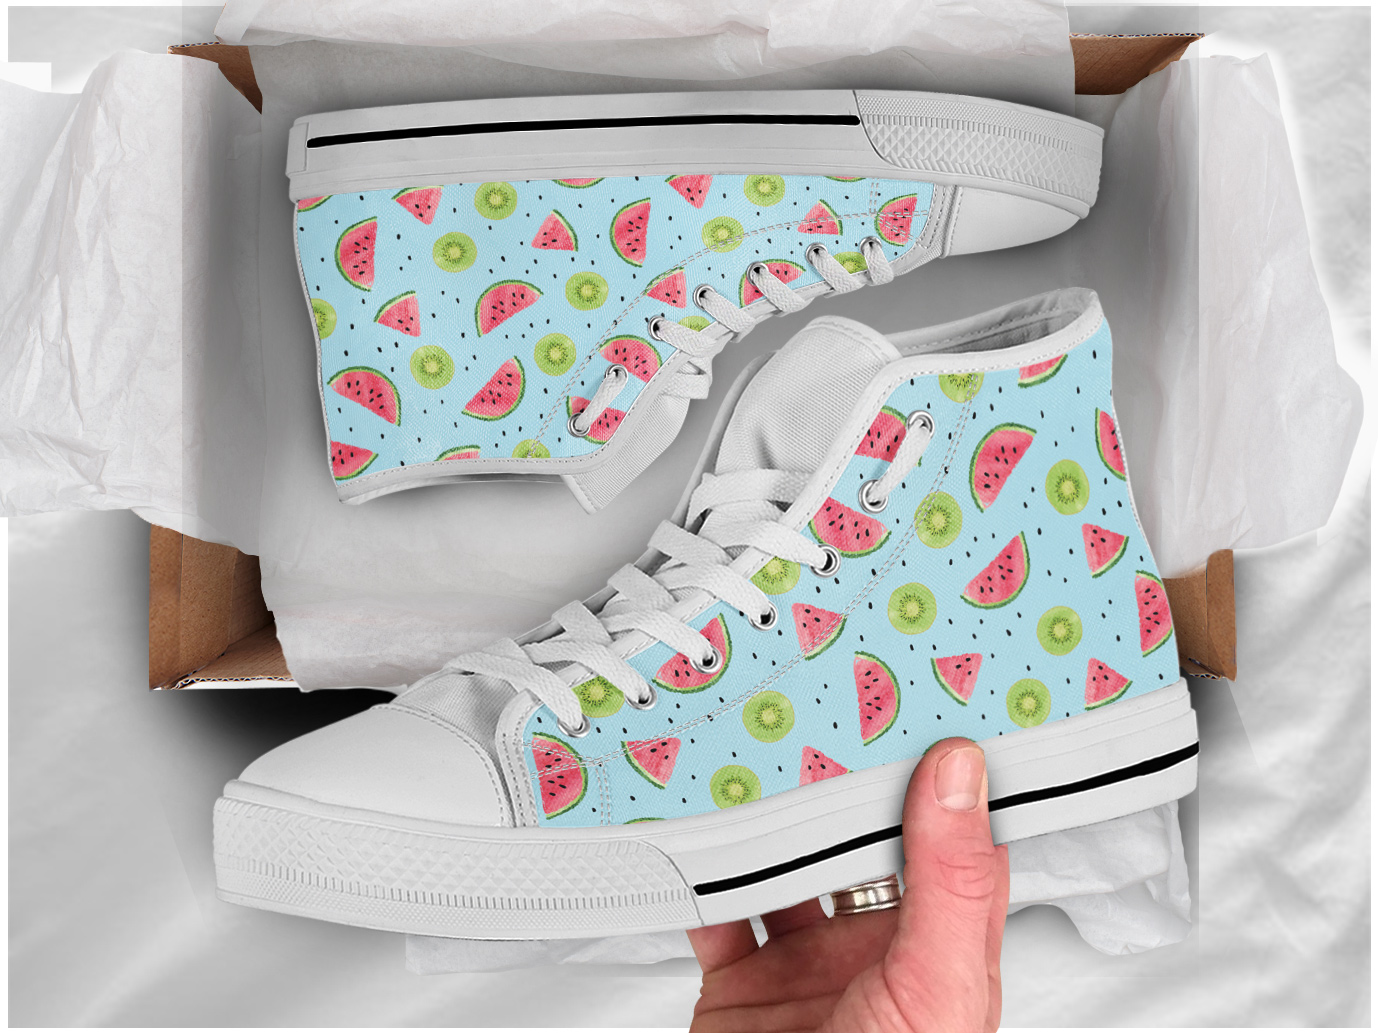 kiwi-watermelon-shoes-high-top-sneakers-2